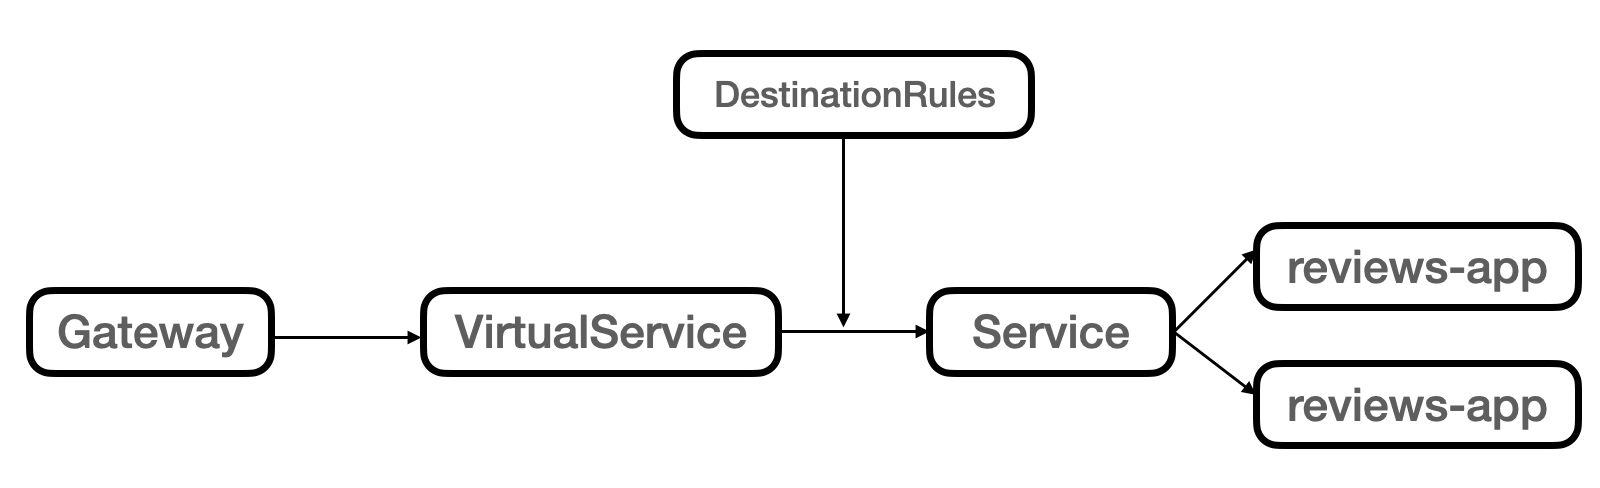 istio_destination-rule_subset